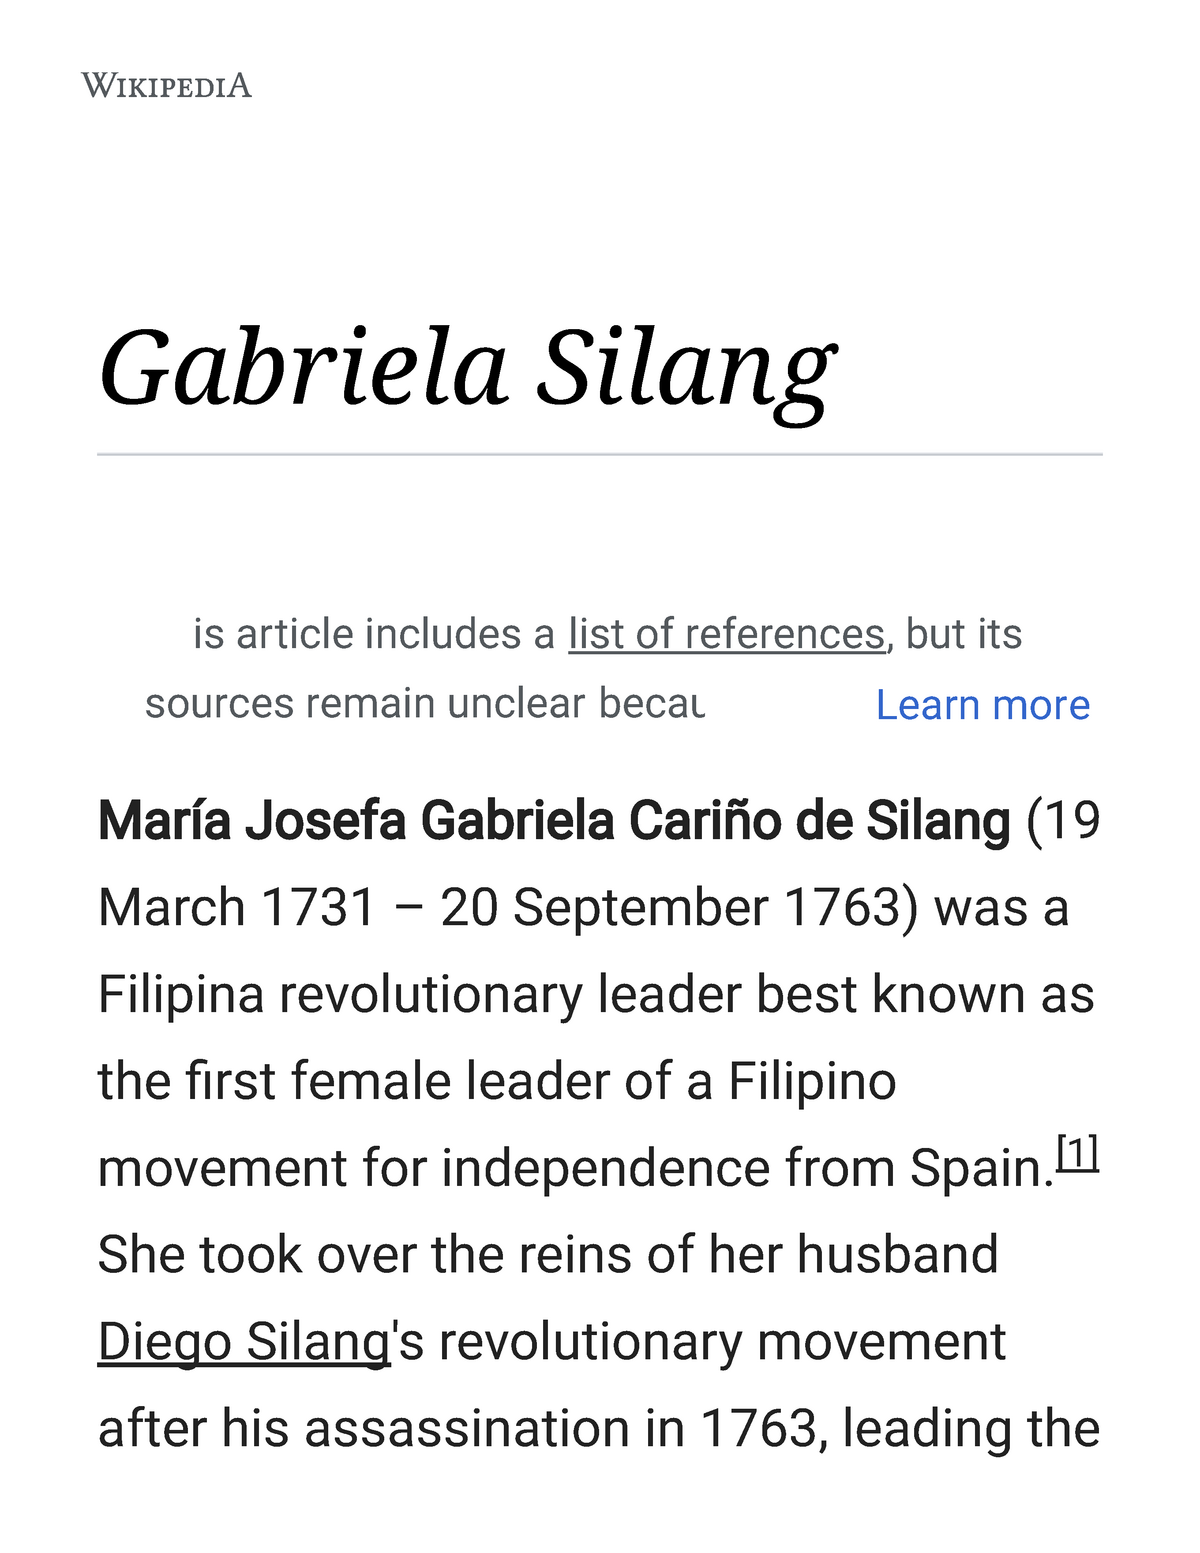 Gabriela Silang Wikipedia Gabriela Silang Mar a Josefa Gabriela 